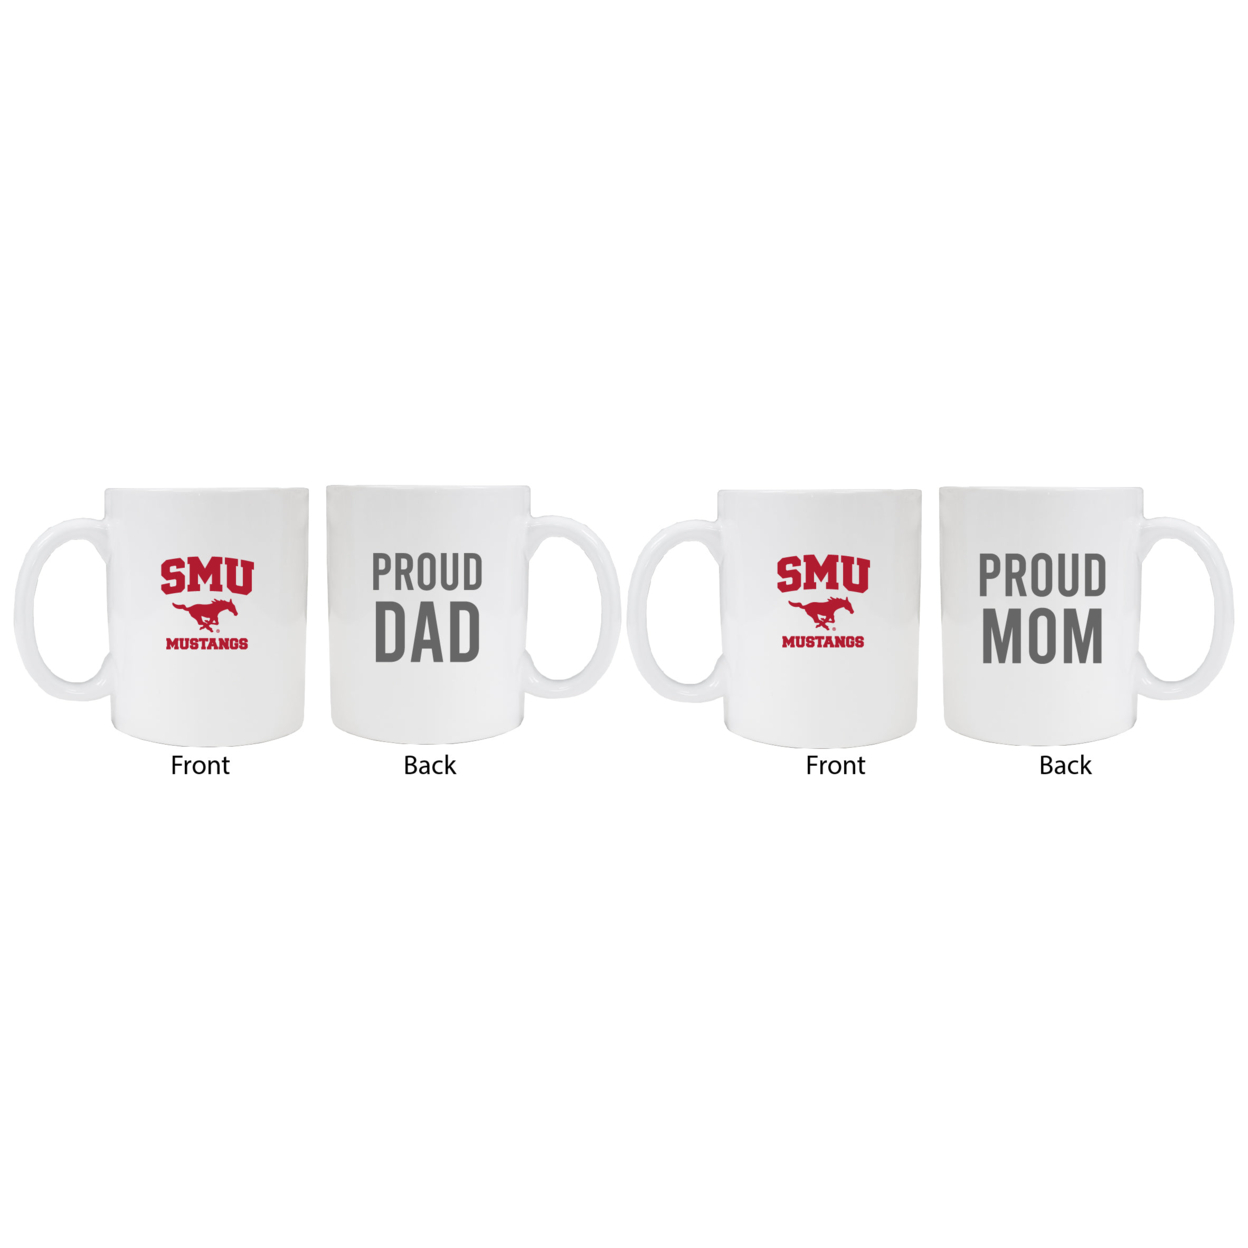 Southern Methodist University Proud Mom And Dad White Ceramic Coffee Mug 2 Pack (White).